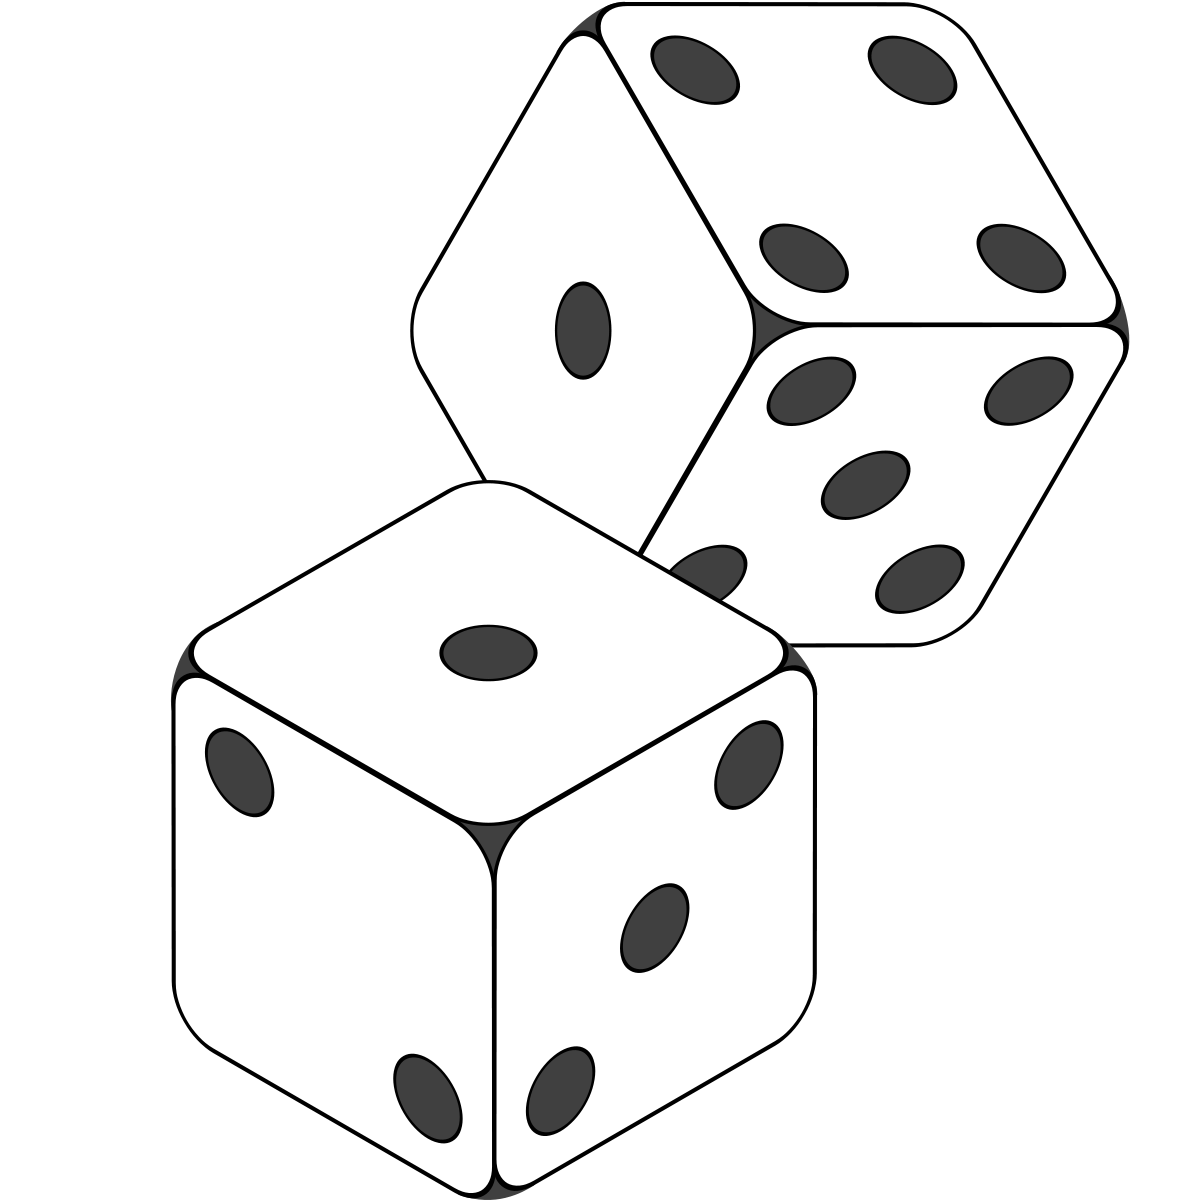 Free Vectors  roll of dice_2